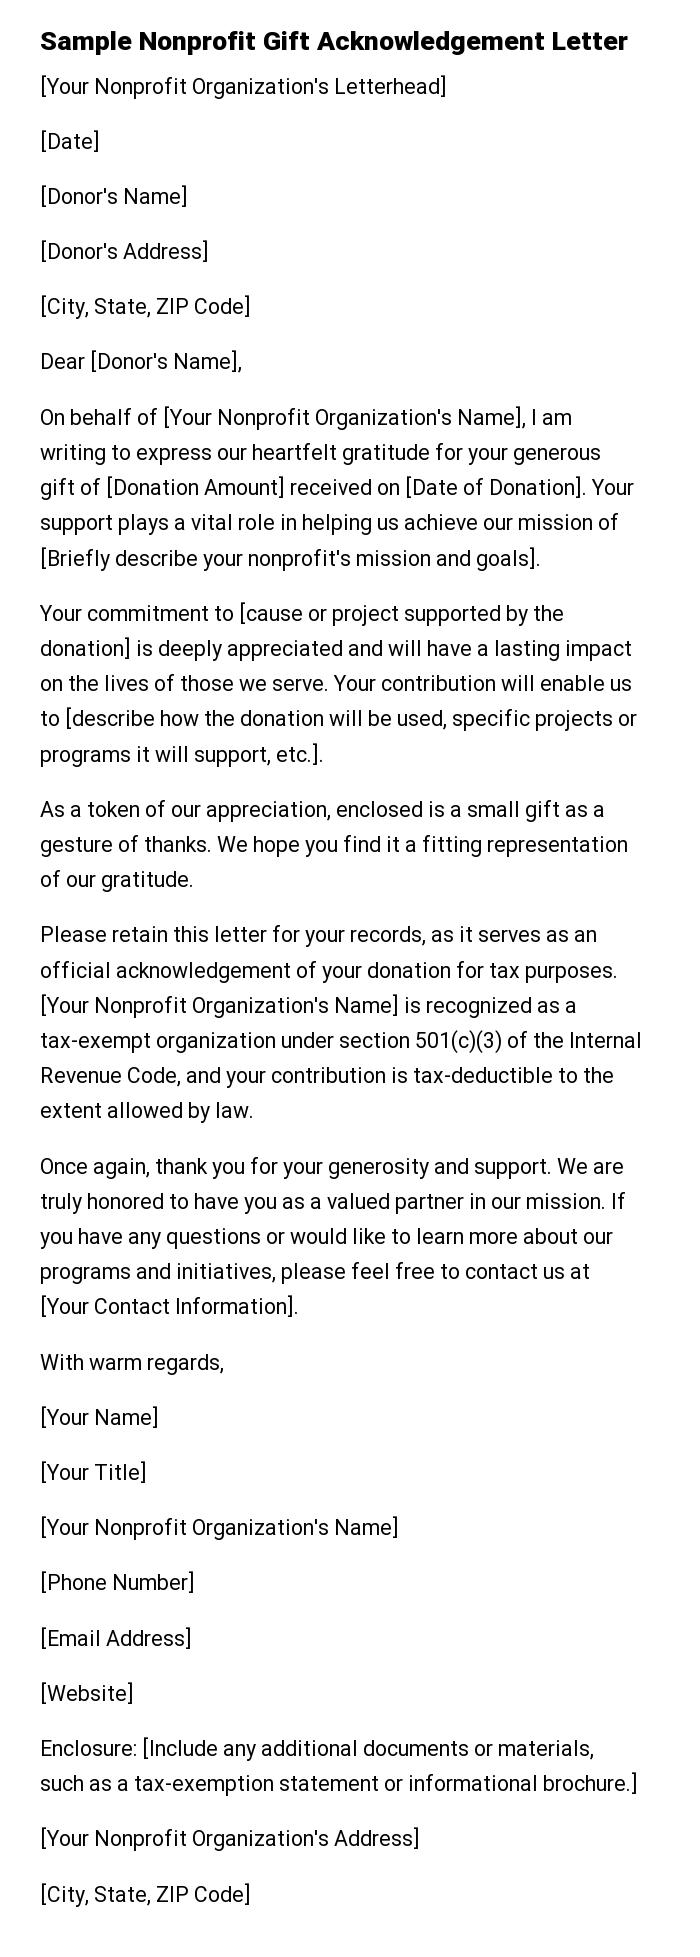 Sample Nonprofit Gift Acknowledgement Letter